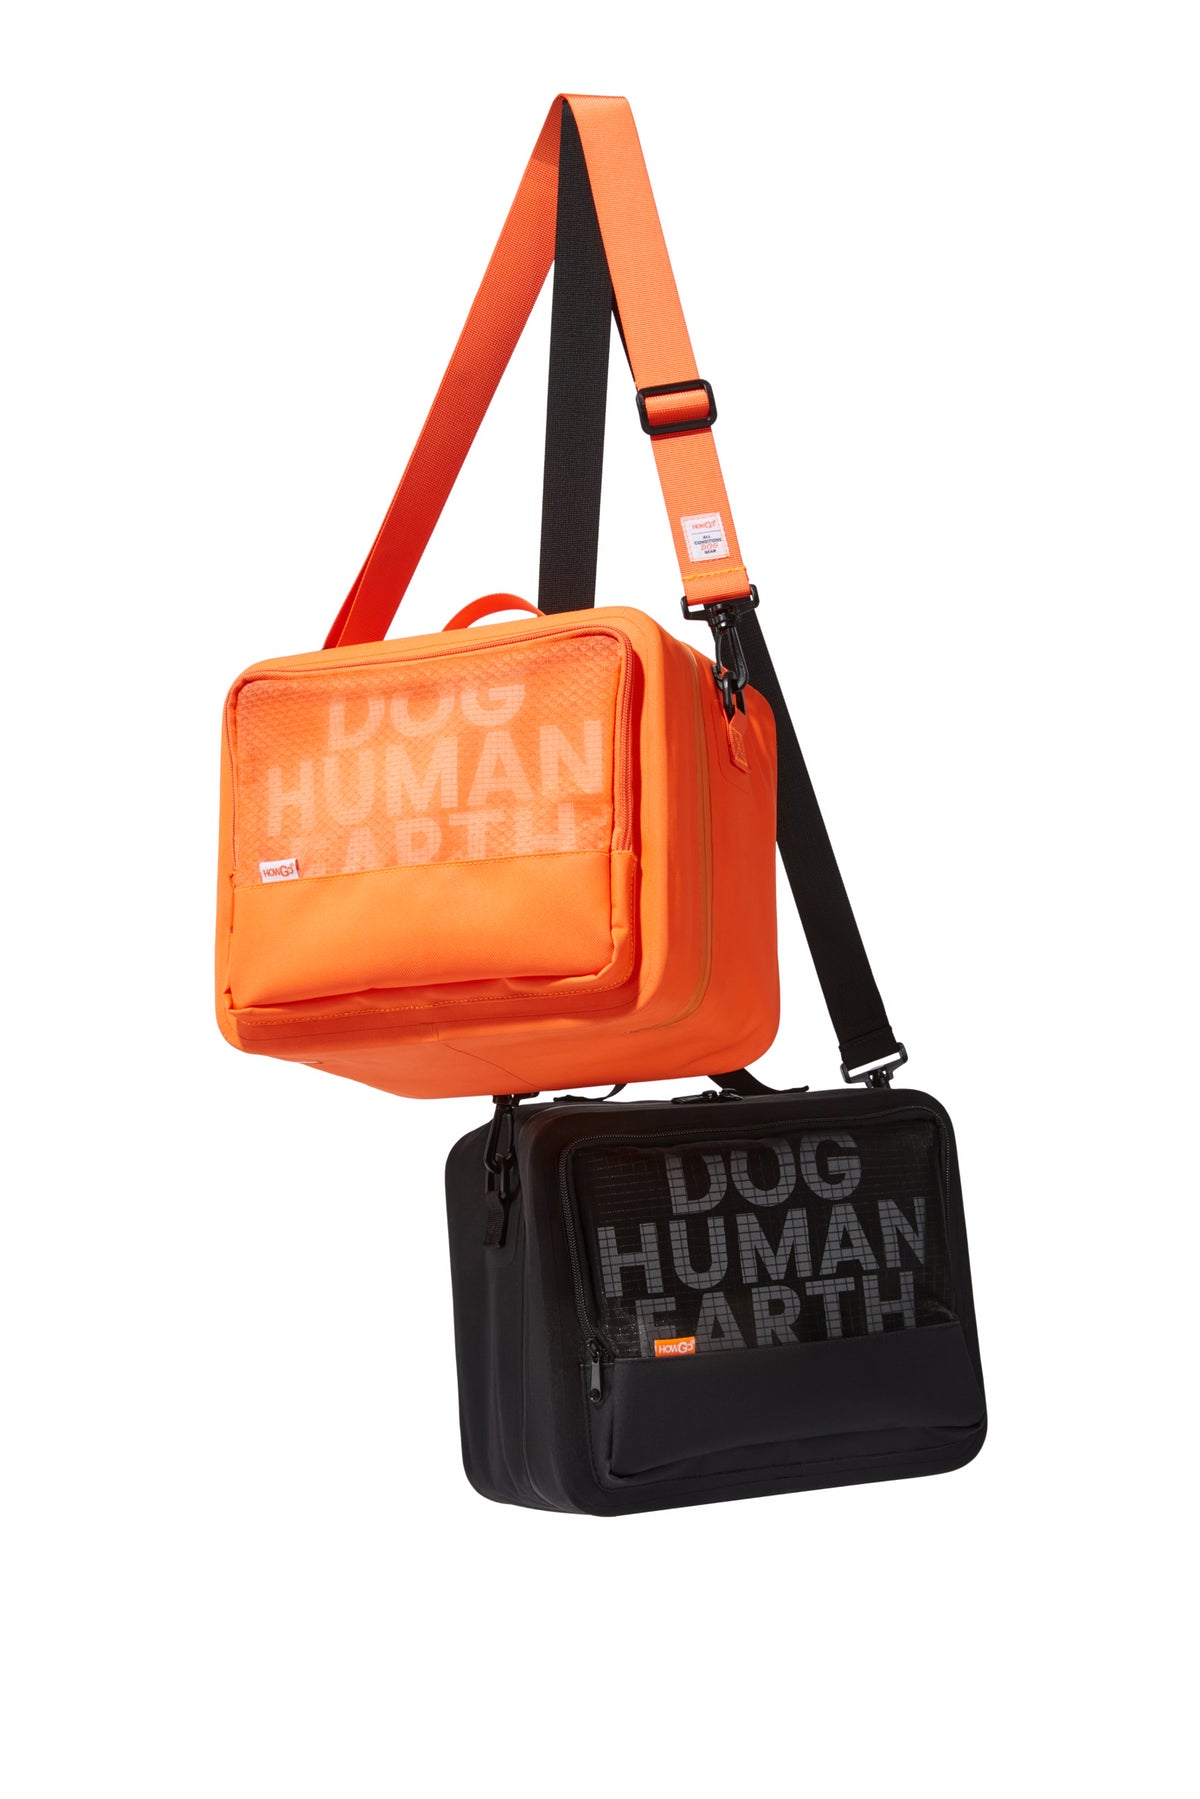 HOWGO Multi-Functional Pet's Travel Bag